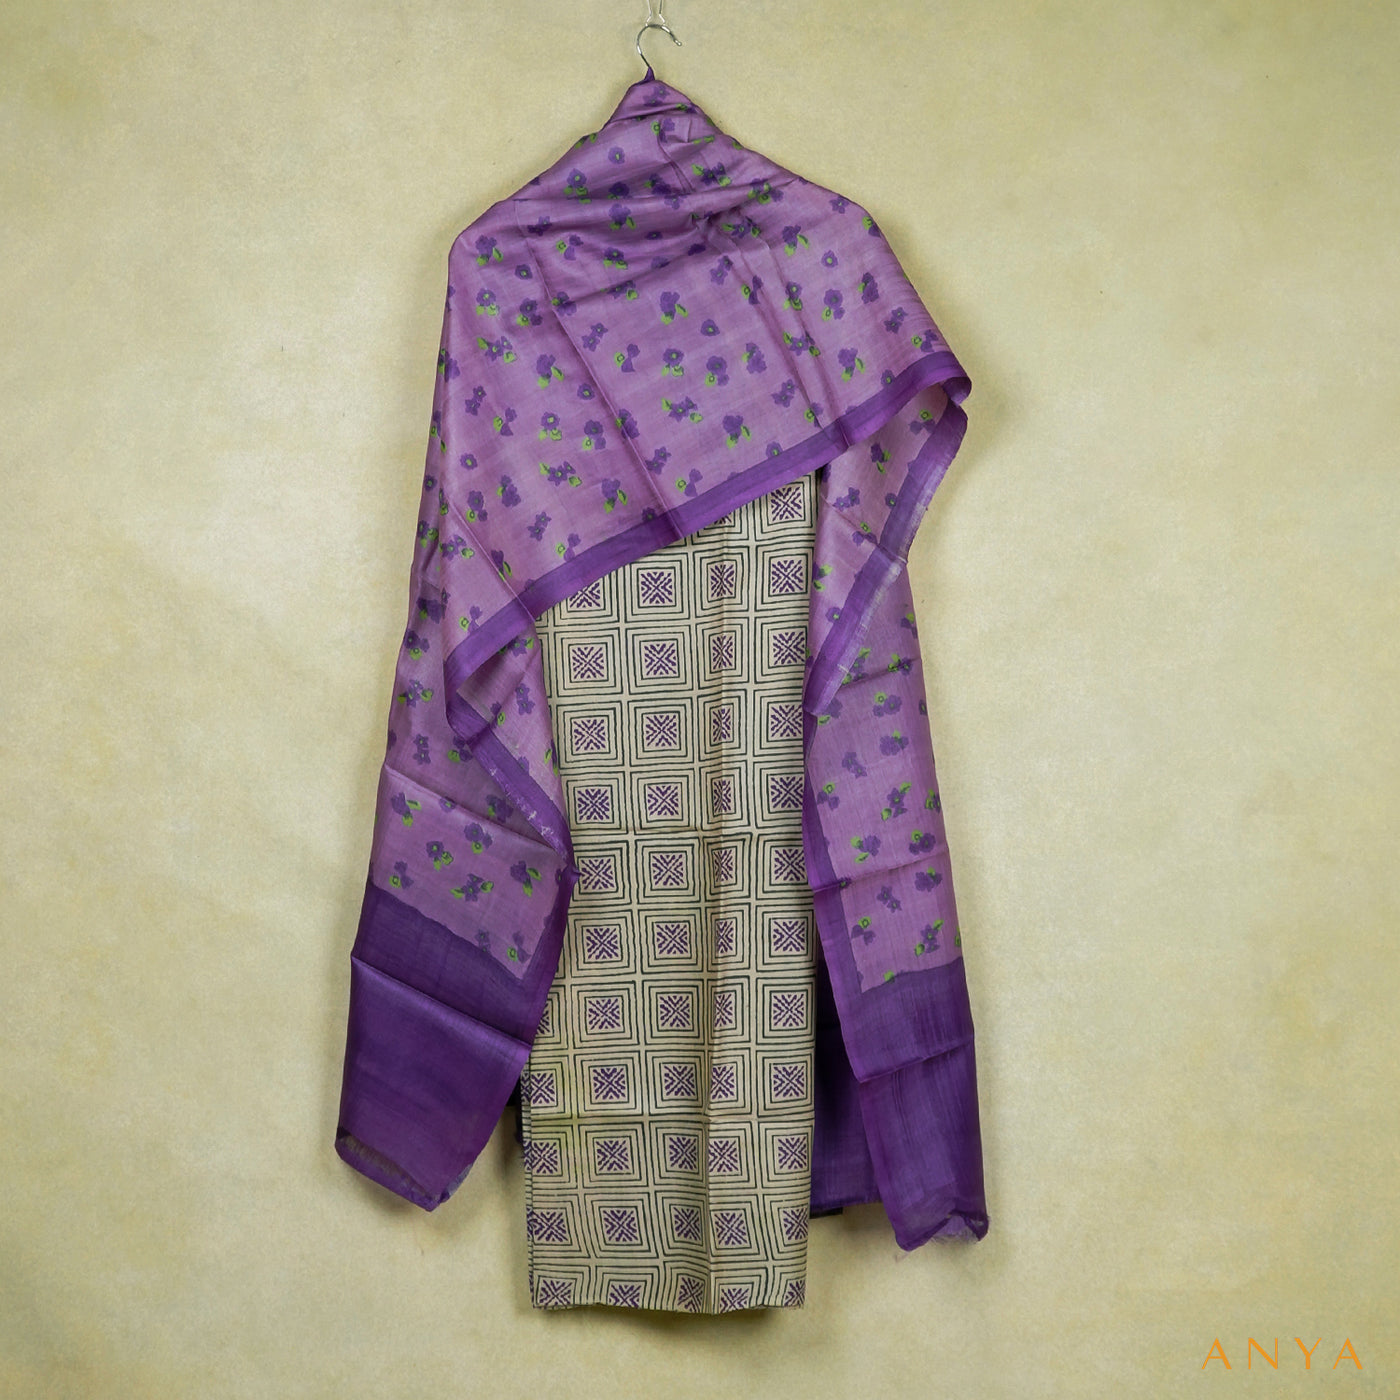 Off White Tussar Silk Salwar with Lavender Floral Printed Dupatta